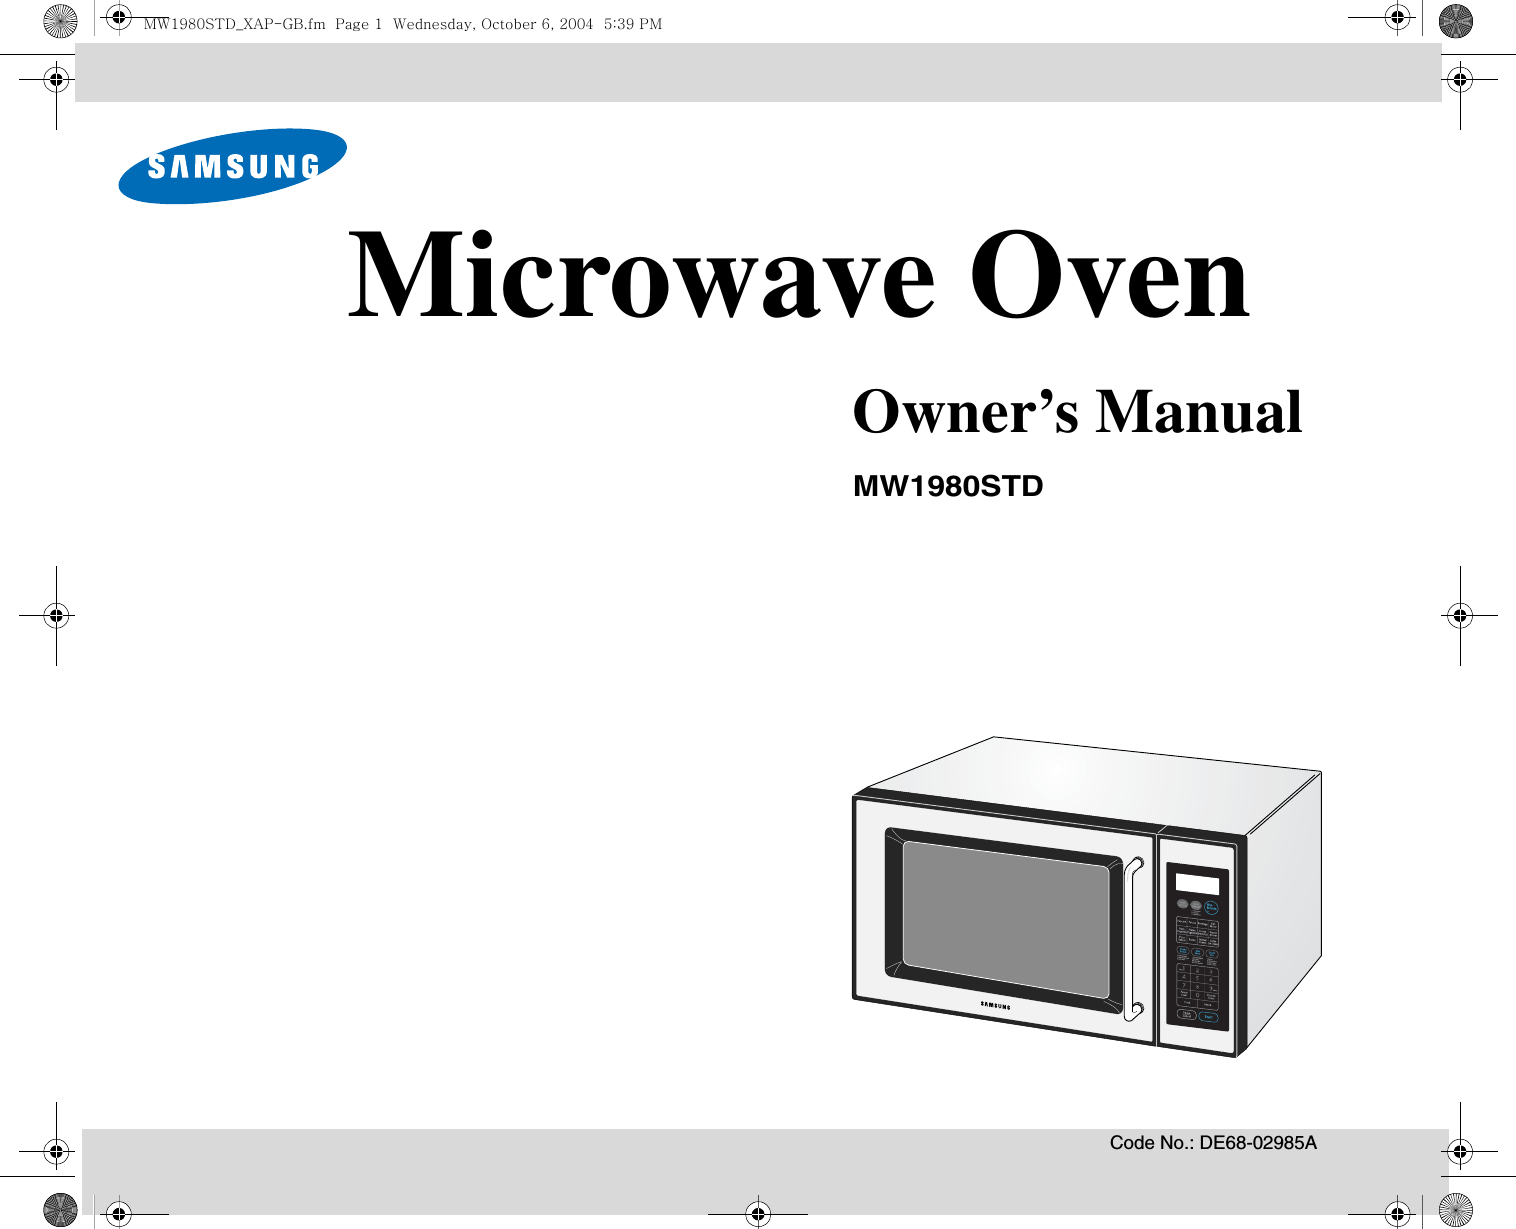 Code No.: DE68-02985AMicrowave OvenOwner’s ManualMW1980STDMW1980STD_XAP-GB.fm  Page 1  Wednesday, October 6, 2004  5:39 PM